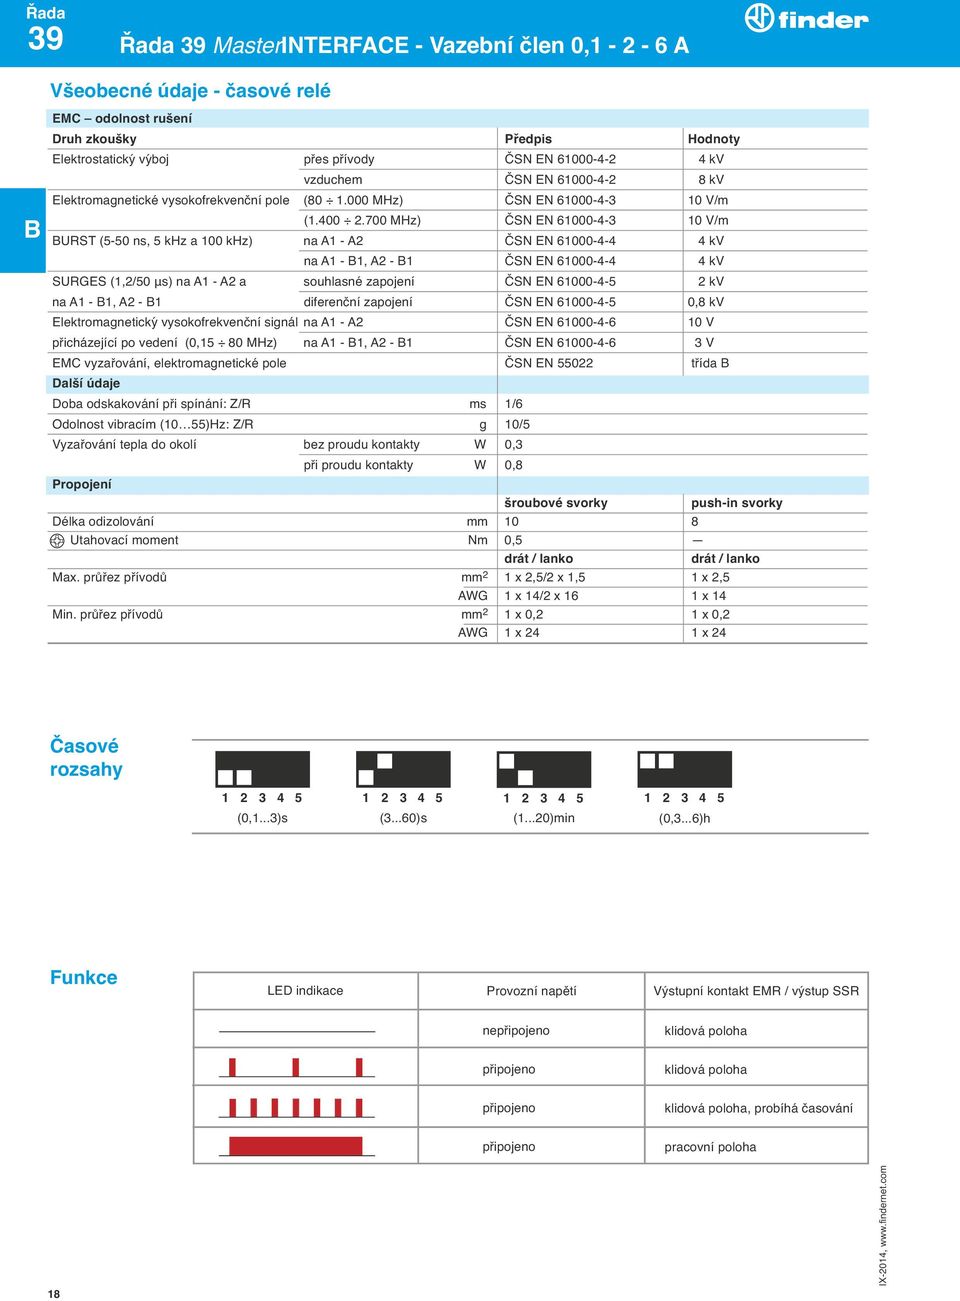 700 MHz) ČSN EN 61000-4-3 10 V/m URST (5-50 ns, 5 khz a 100 khz) na A1 - A2 ČSN EN 61000-4-4 4 kv na A1-1, A2-1 ČSN EN 61000-4-4 4 kv SURGES (1,2/50 μs) na A1 - A2 a souhlasné zapojení ČSN EN